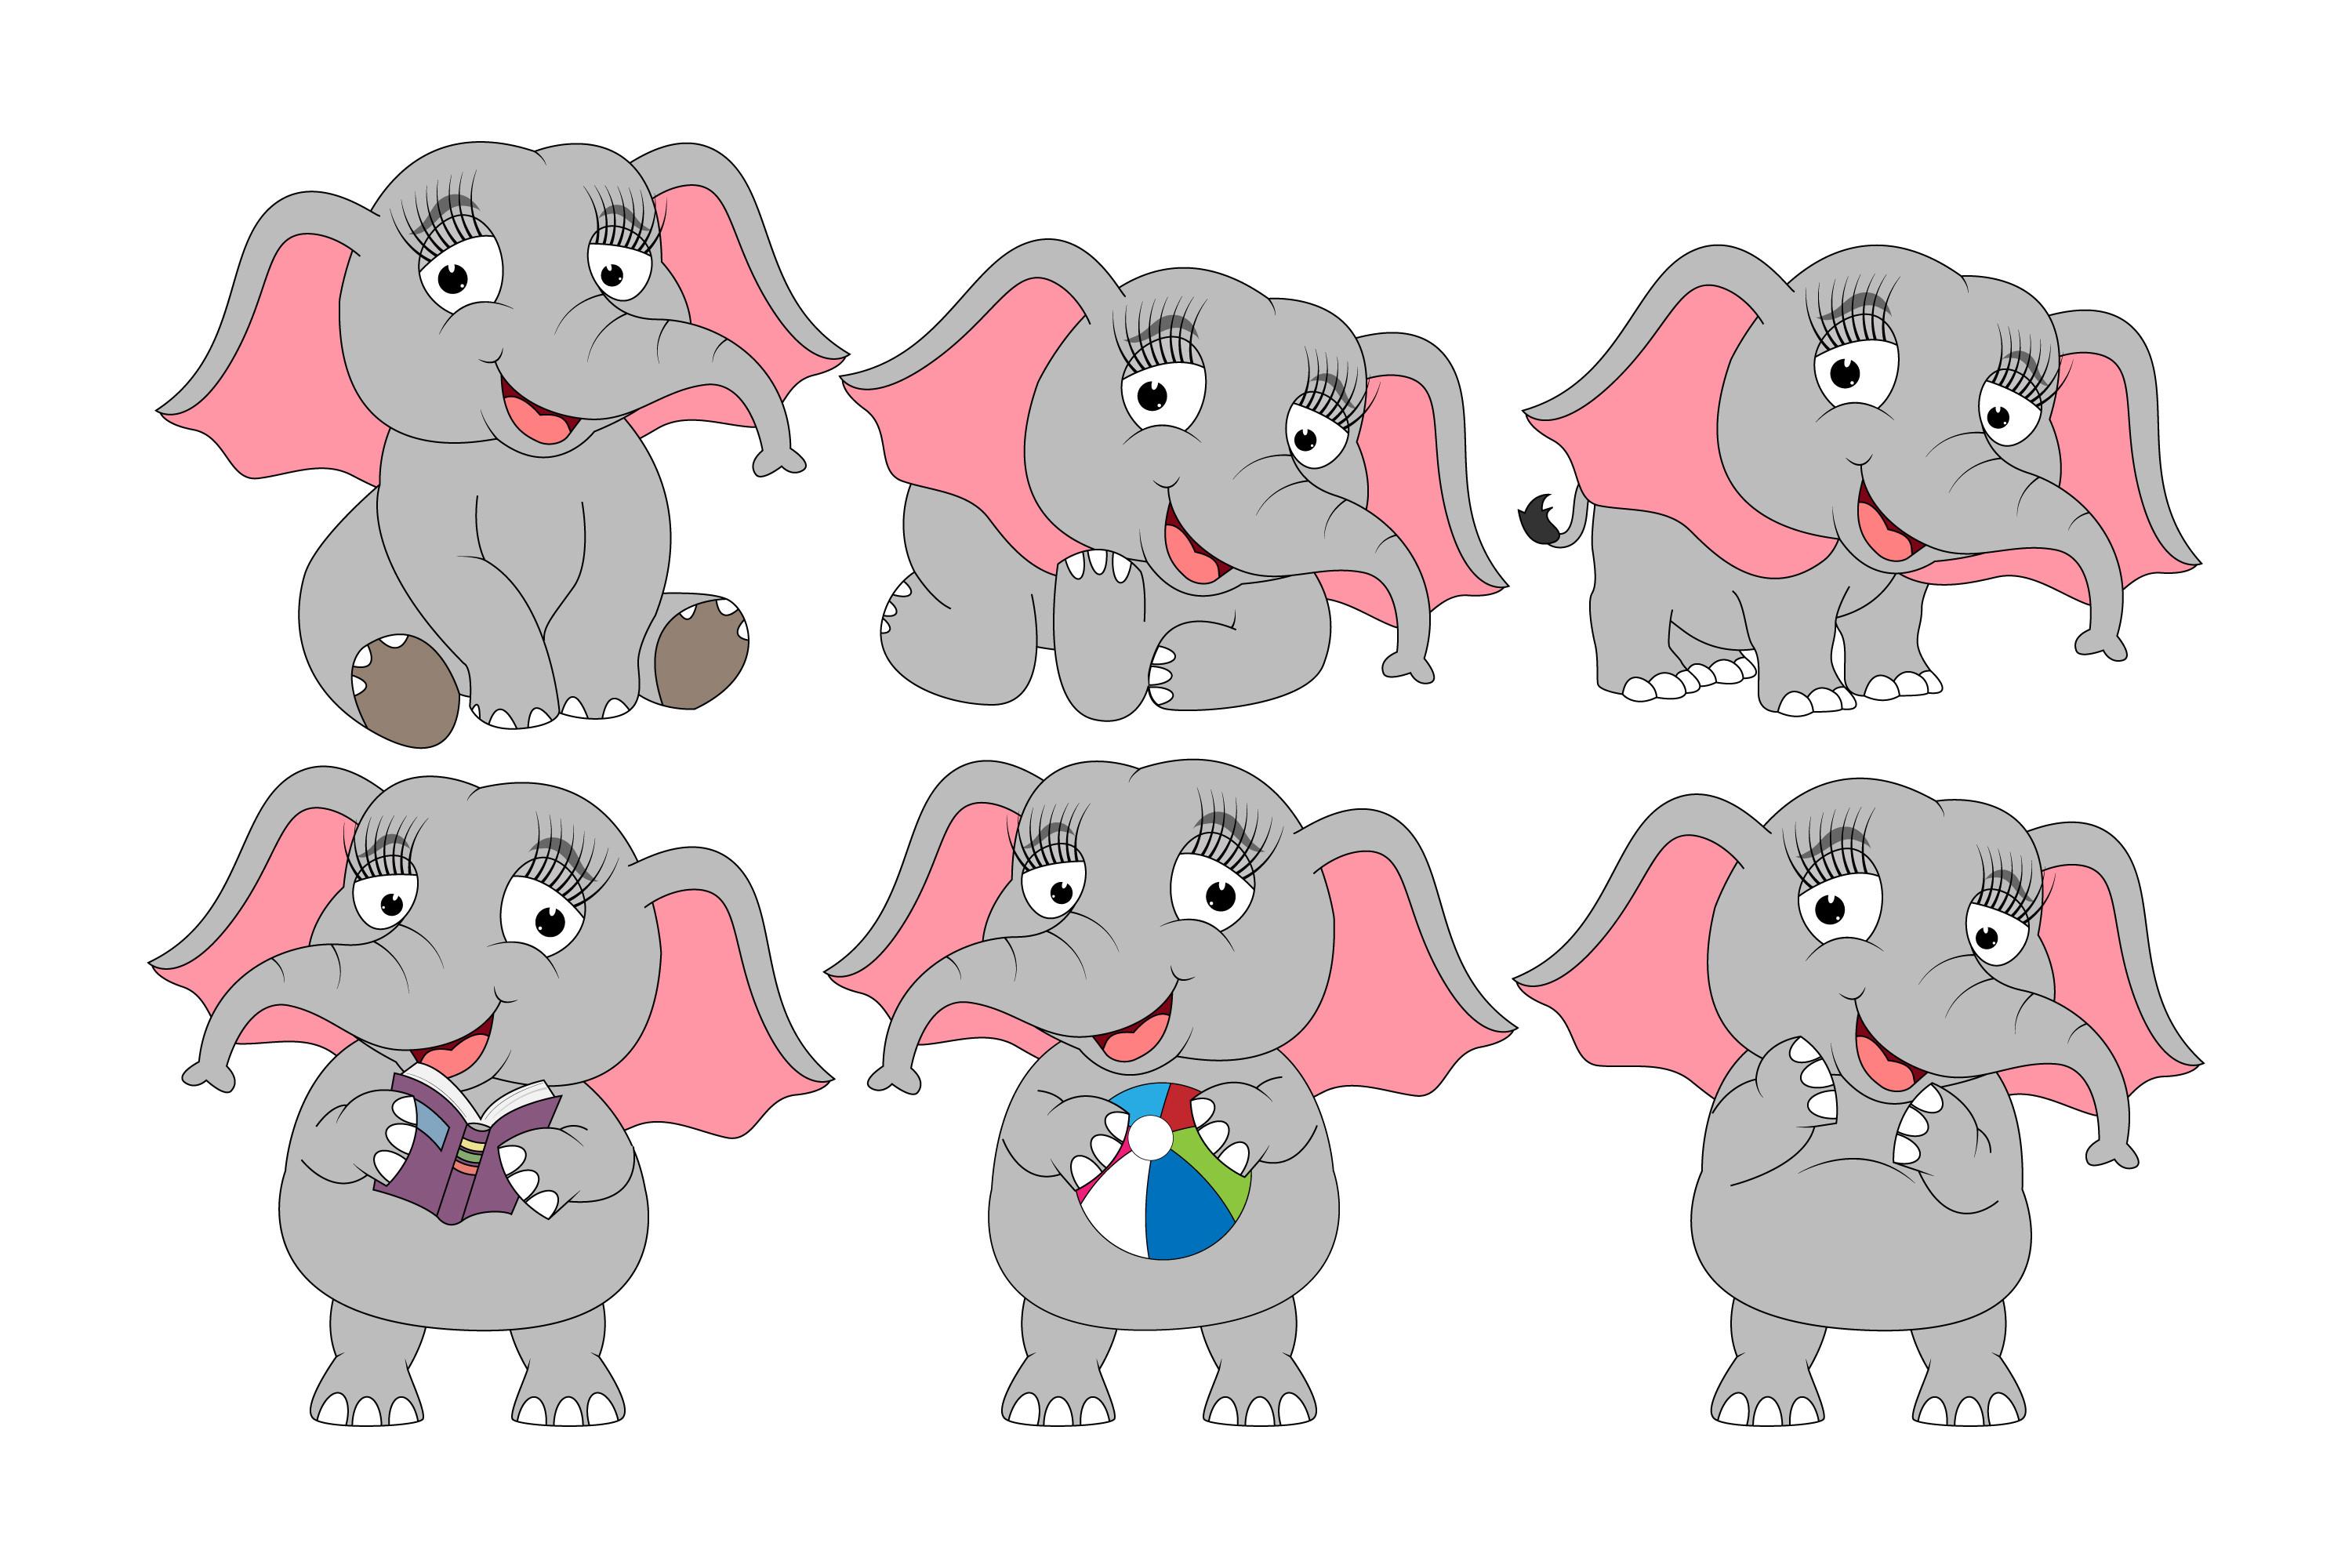 Cute Elephant Animal Cartoon Graphic